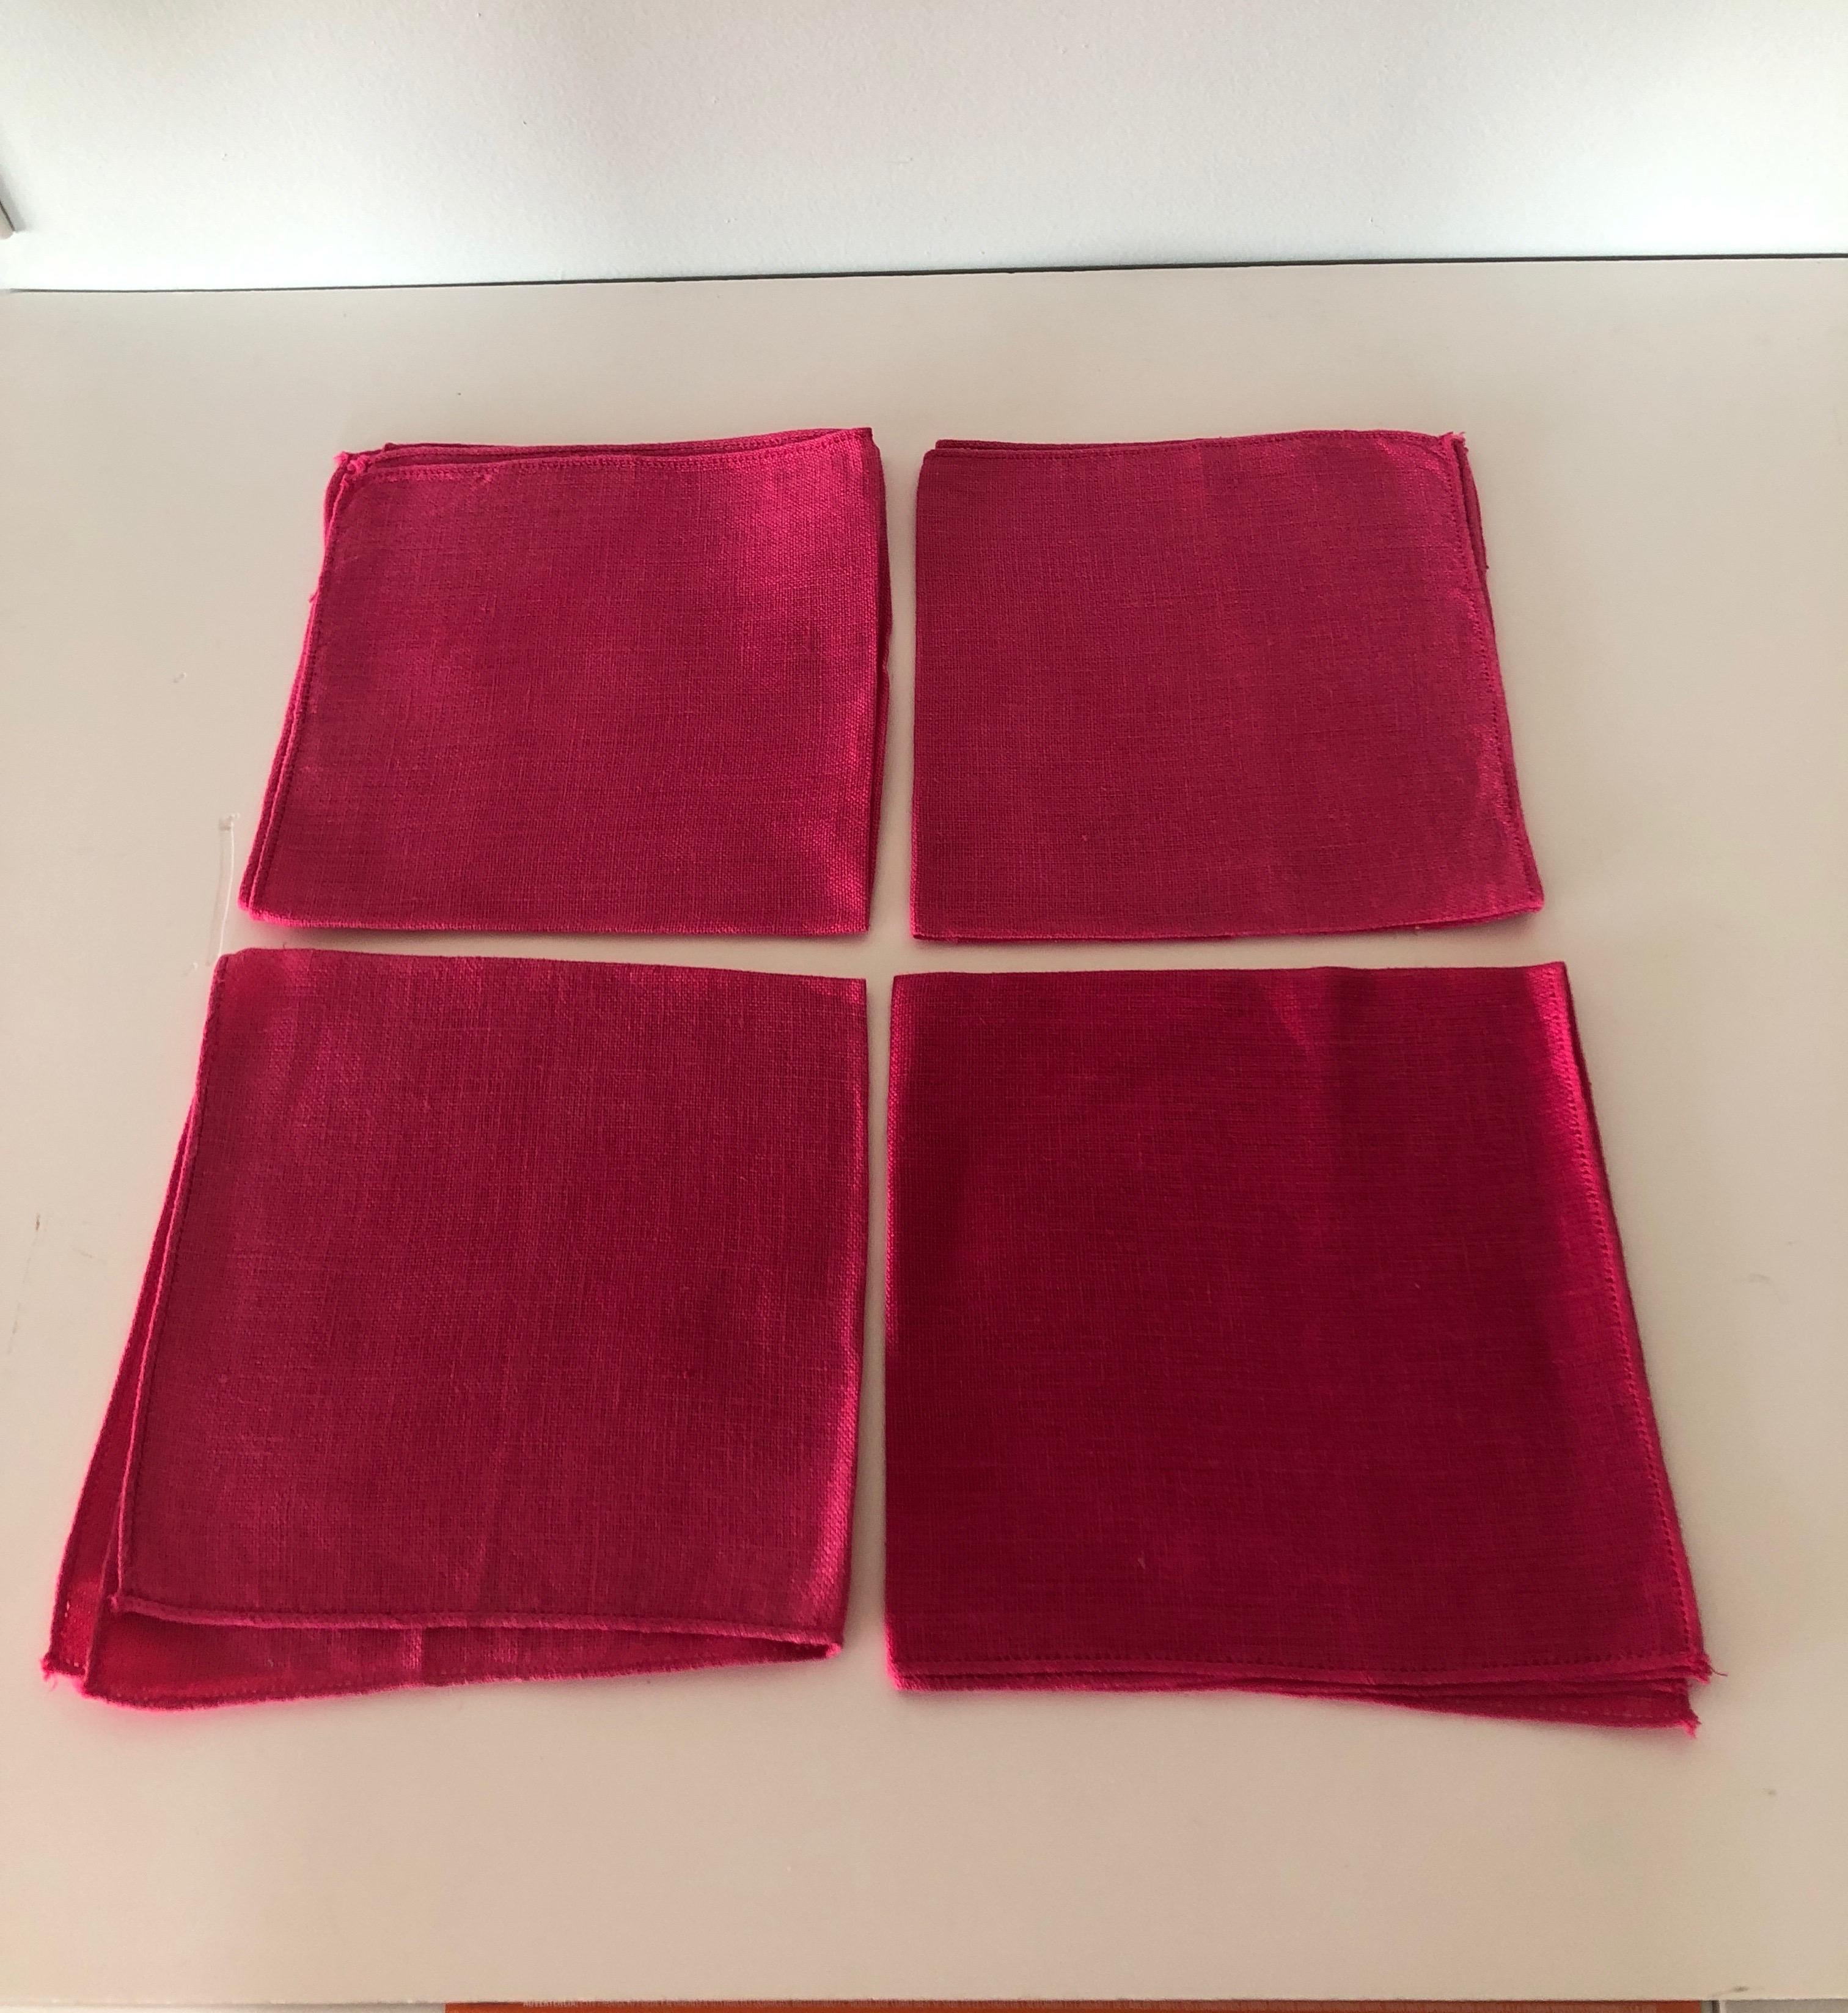 Set of (4) Fuchsia color linen napkins.
Size: 16